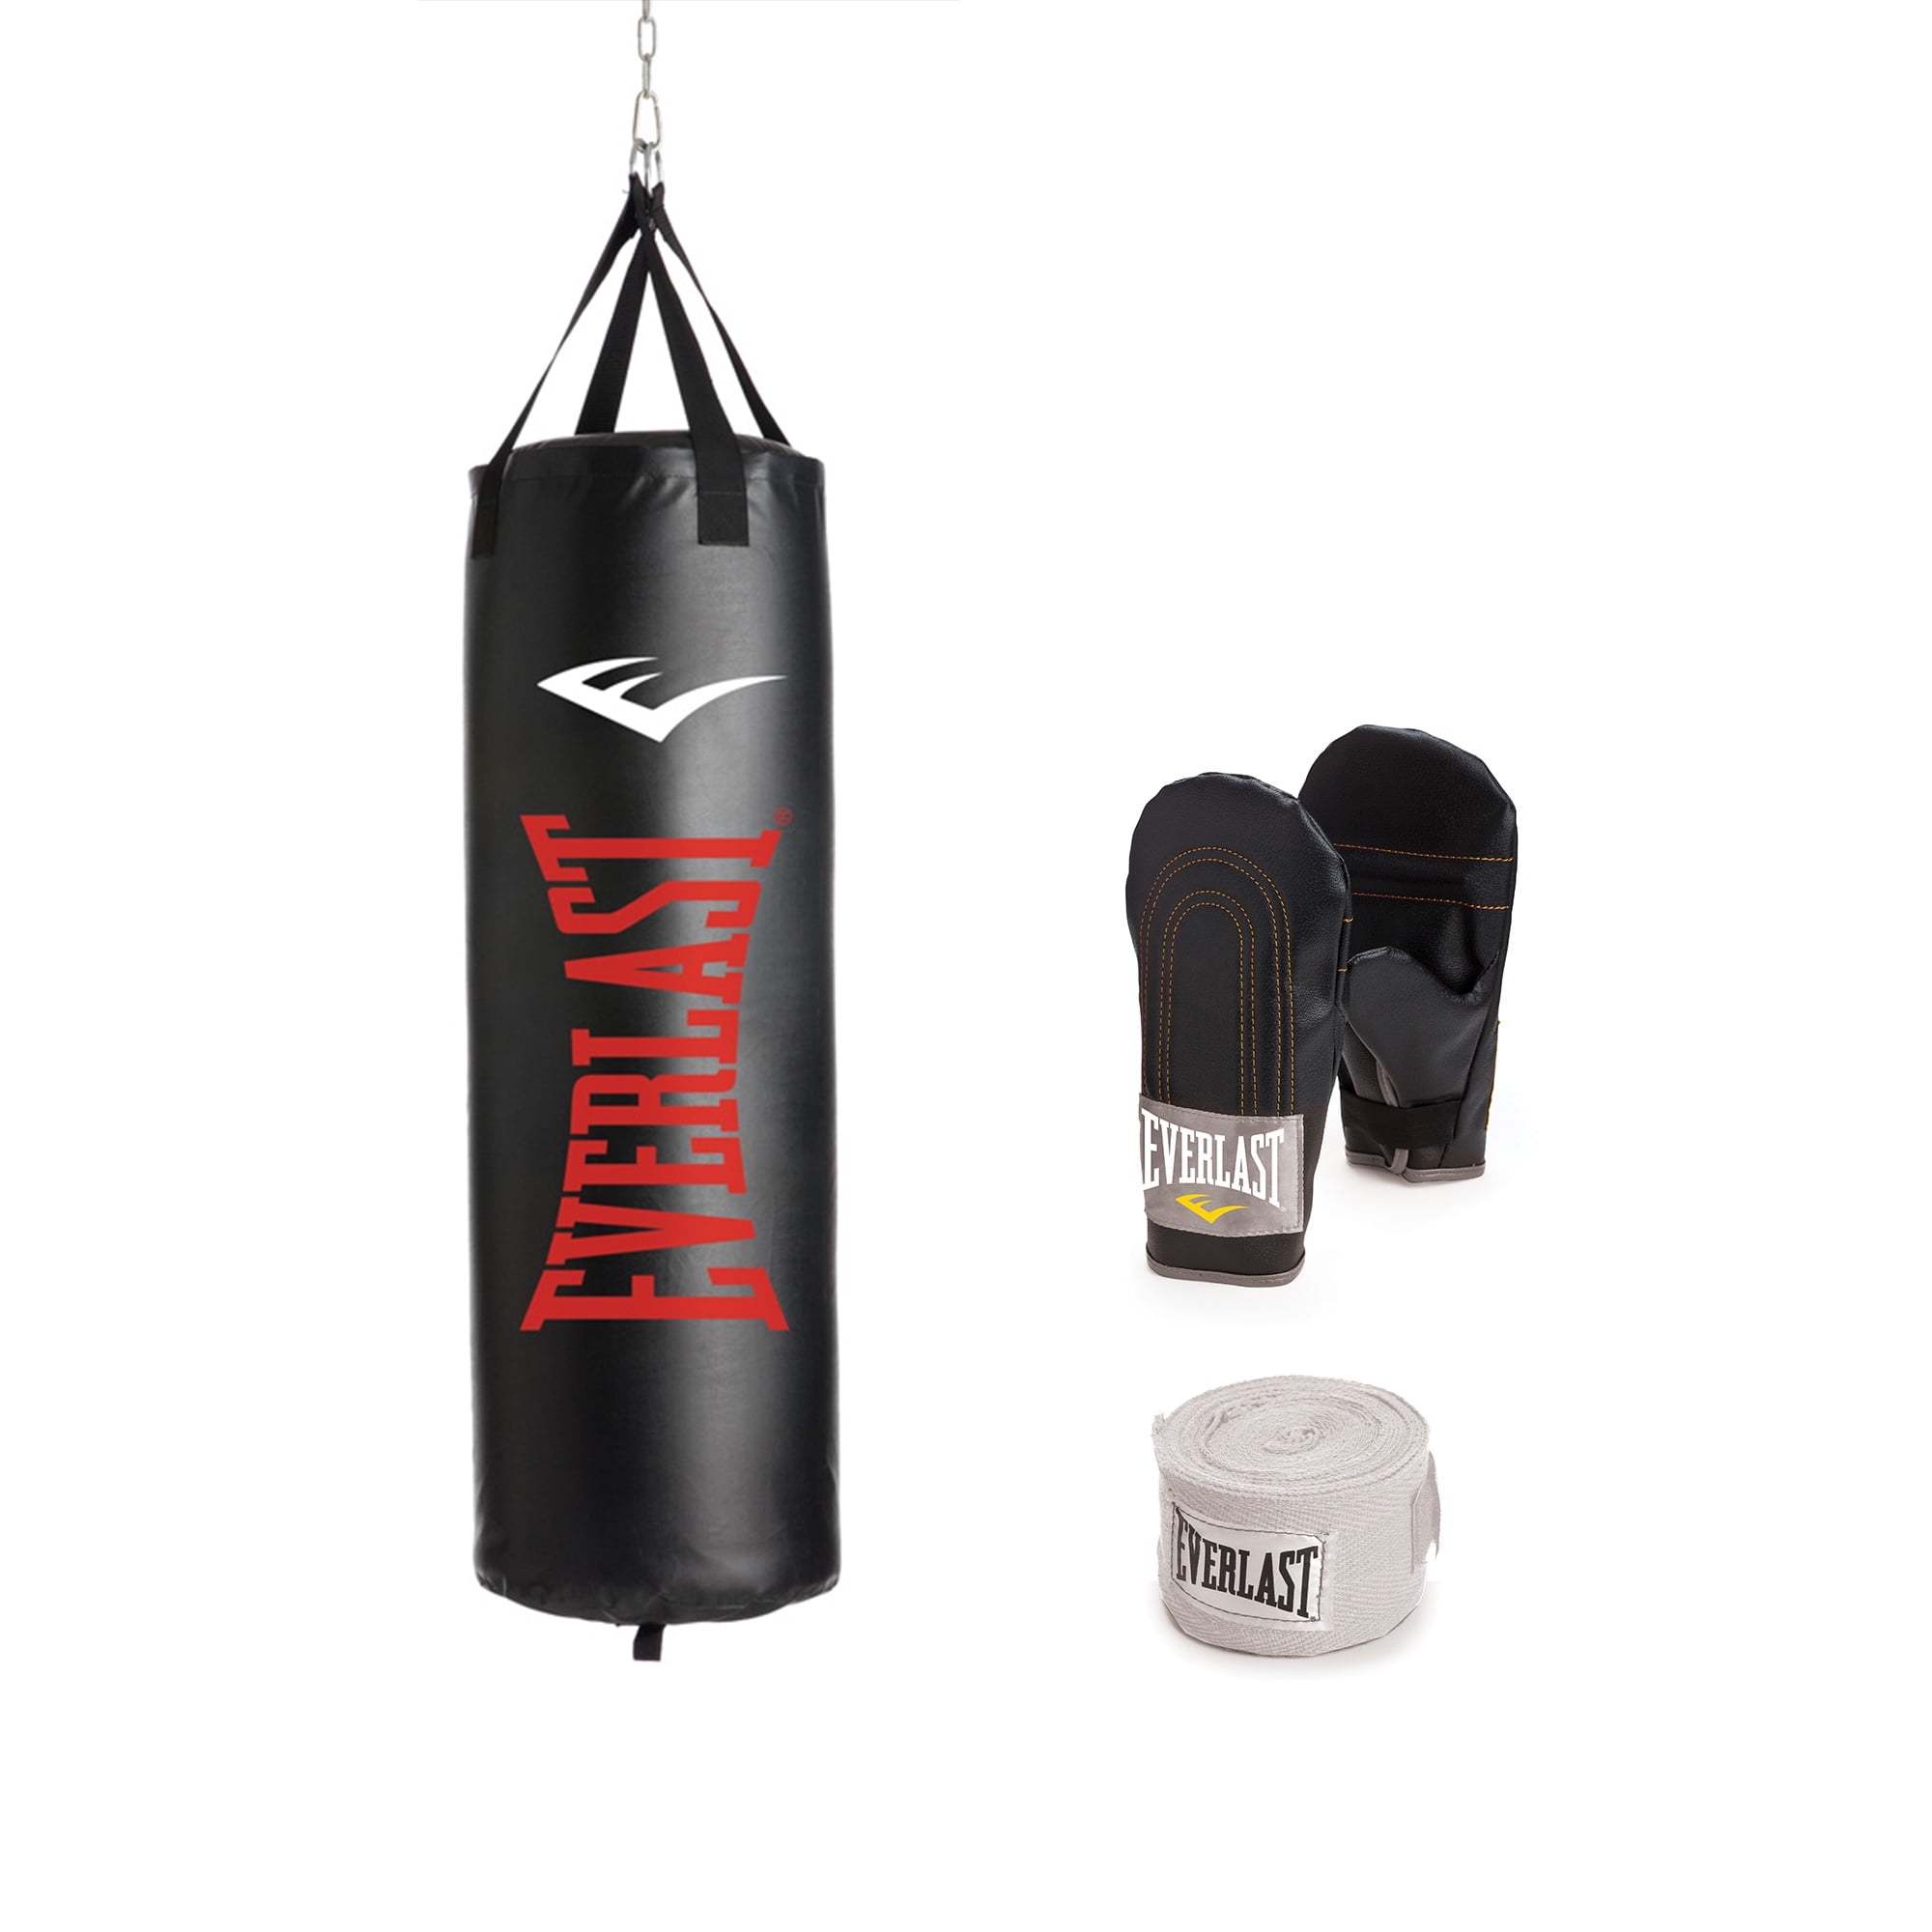 EVERLAST Boxing Gloves Sack Pack Zipper Bag Equipment Sports Bags Supplies NEW 